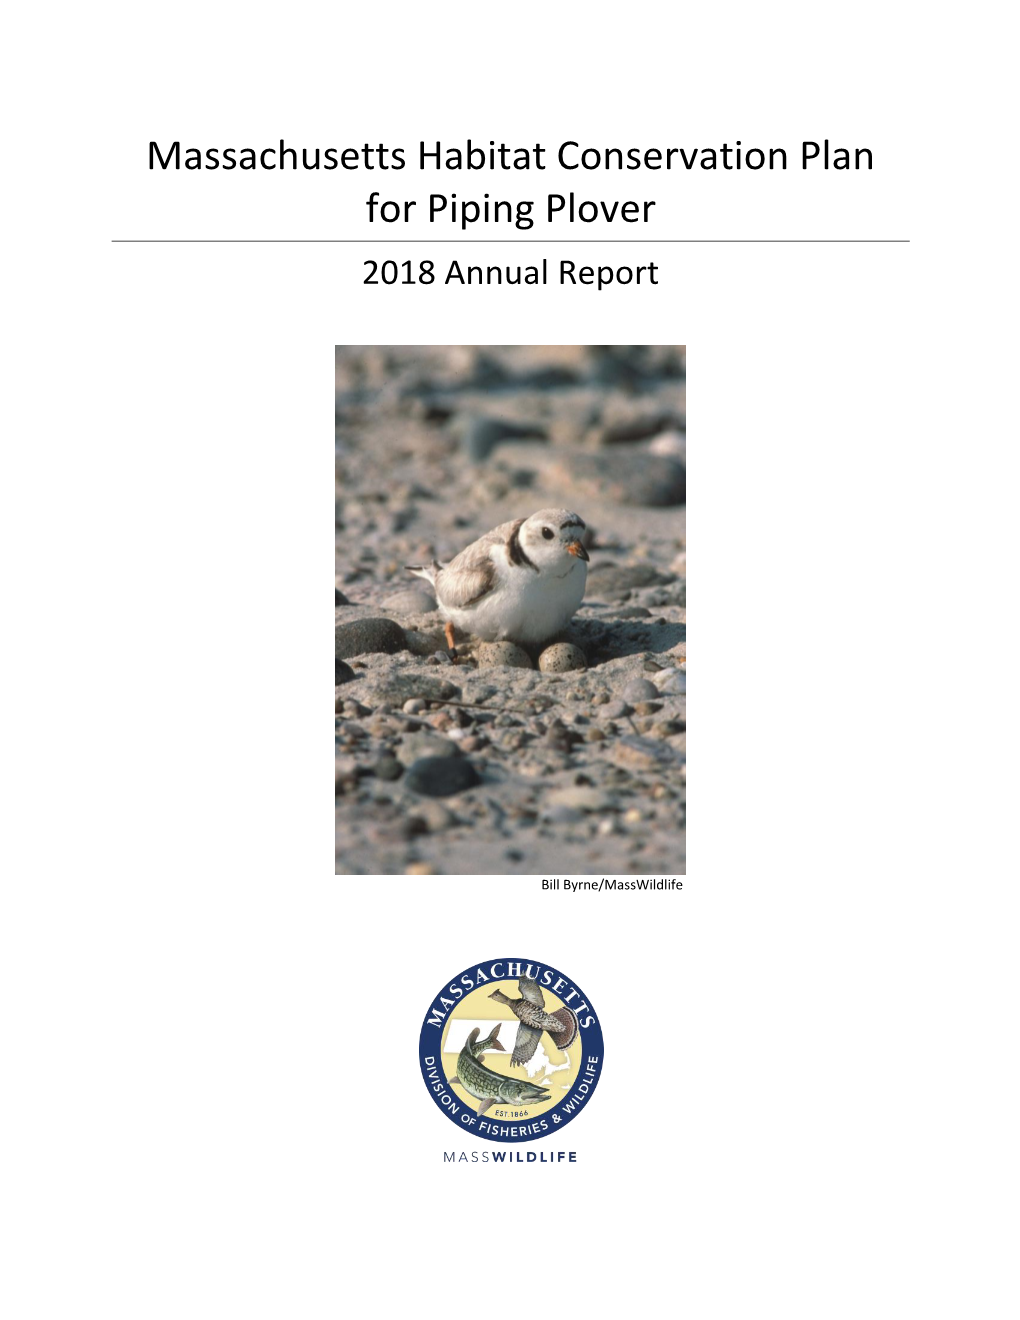 Massachusetts Habitat Conservation Plan for Piping Plovers, 2018